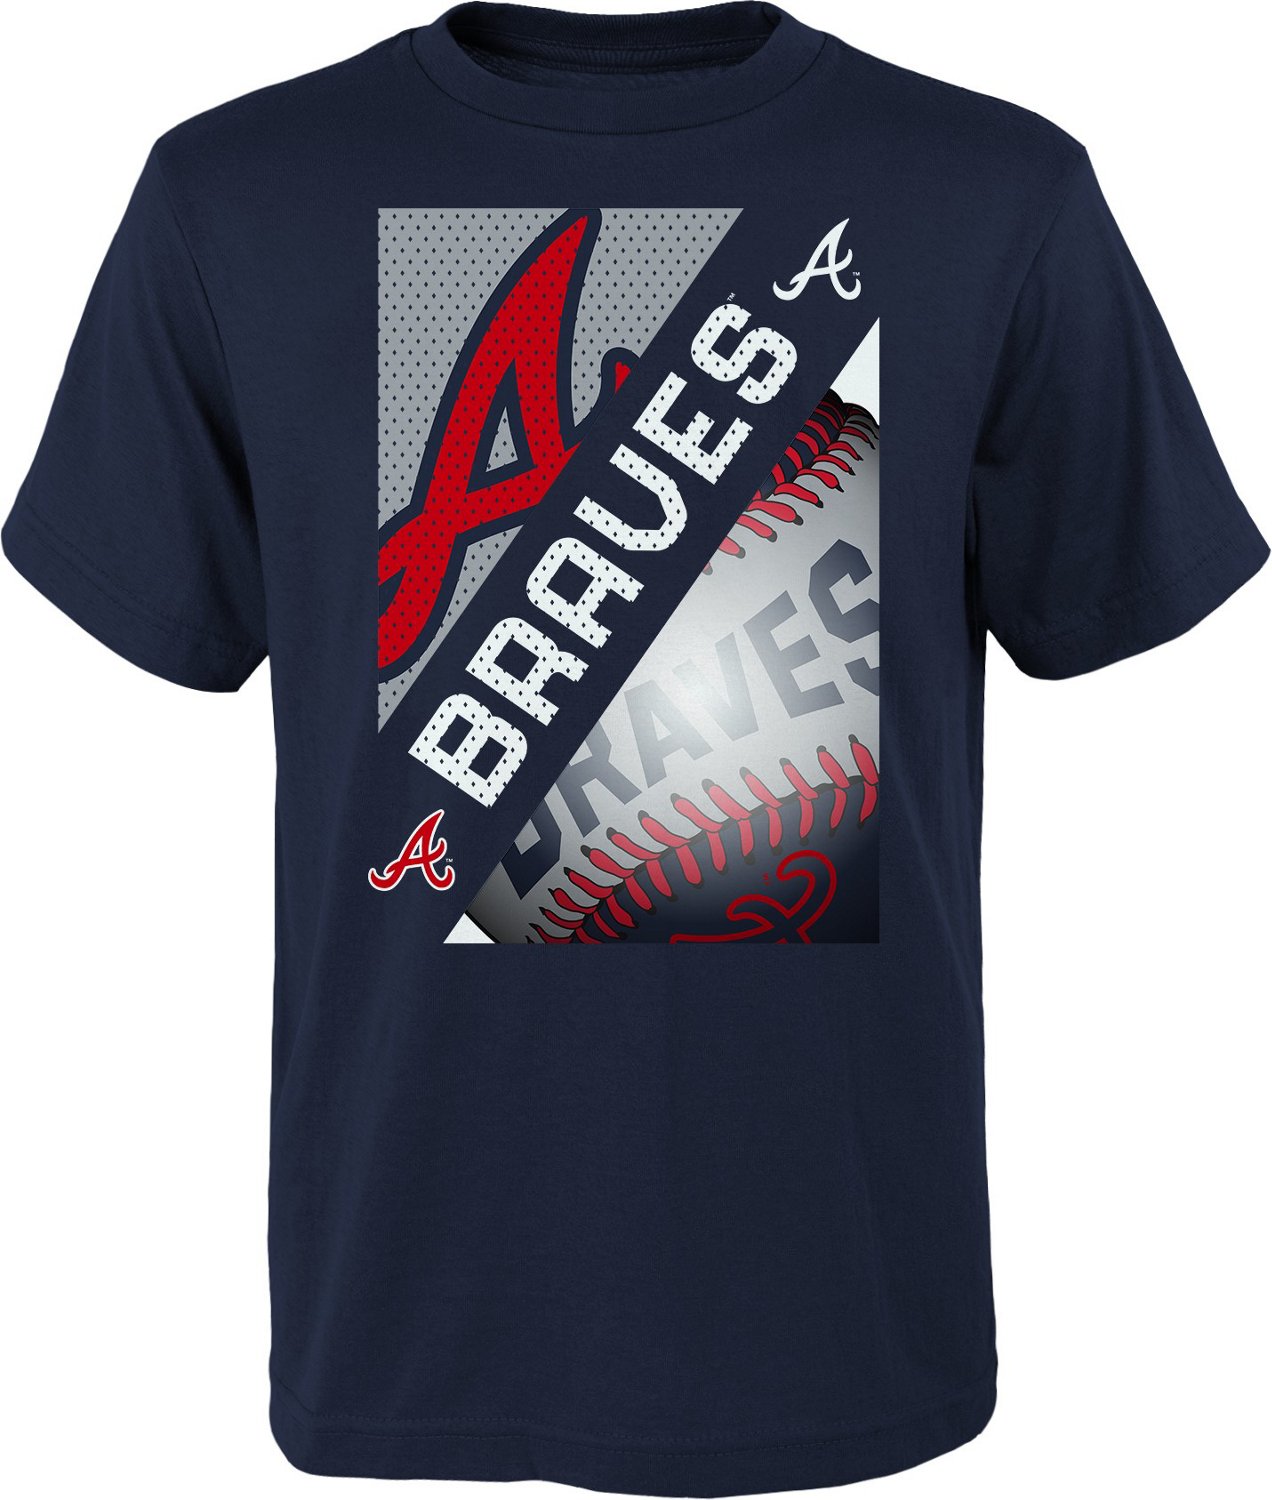 Outerstuff Boys' Atlanta Braves Right Fielder Graphic T-shirt